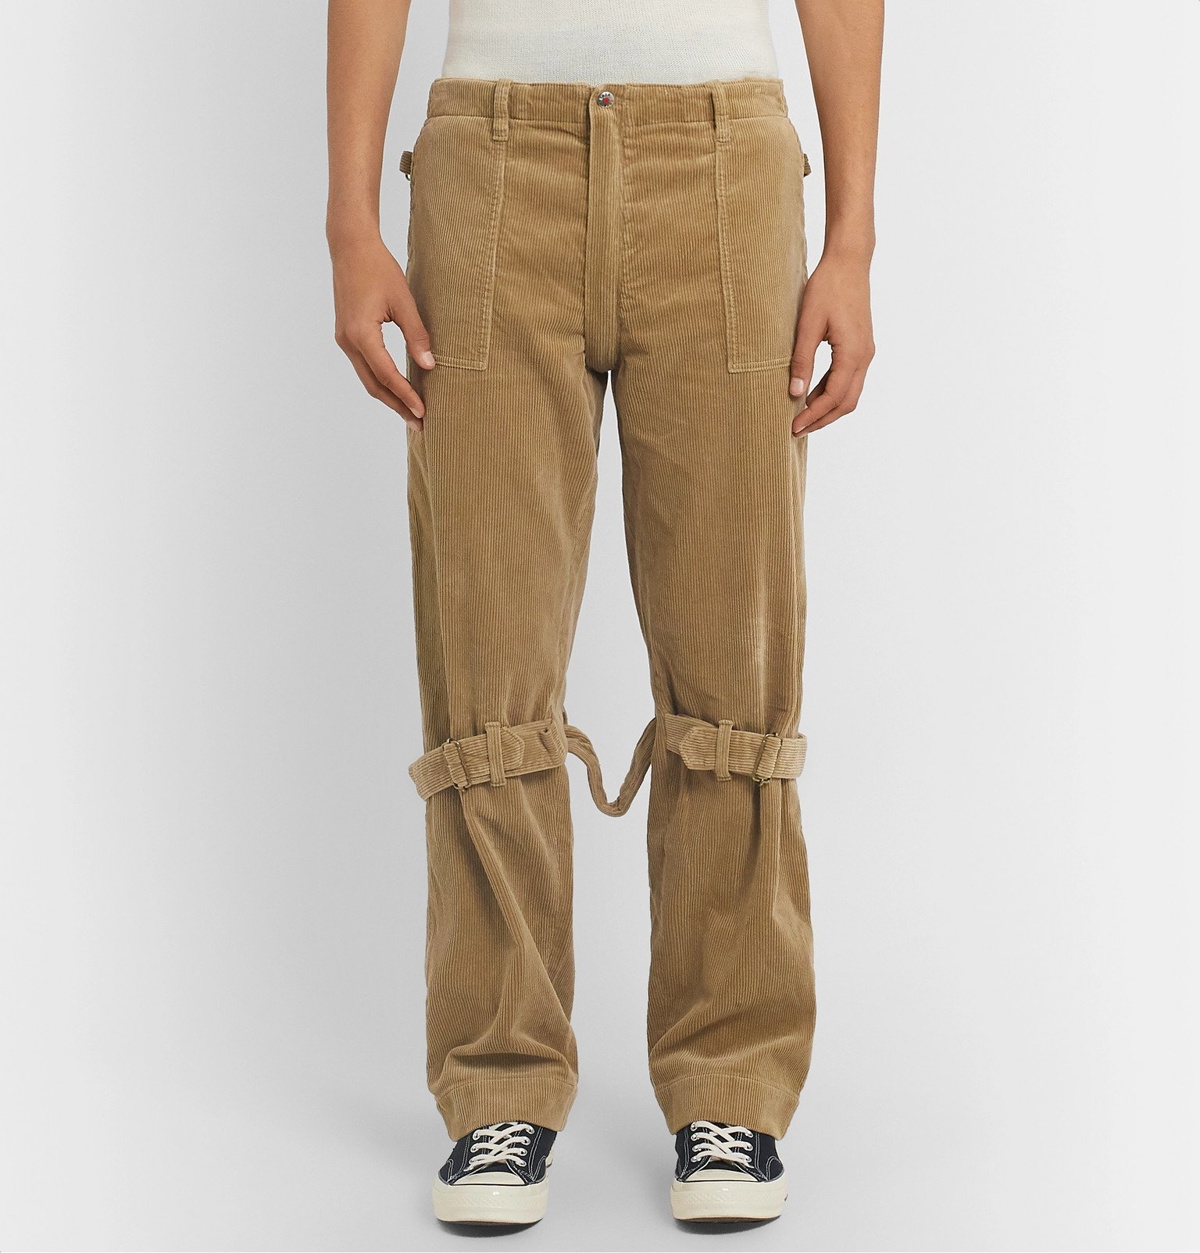 humanmade corduroy pants